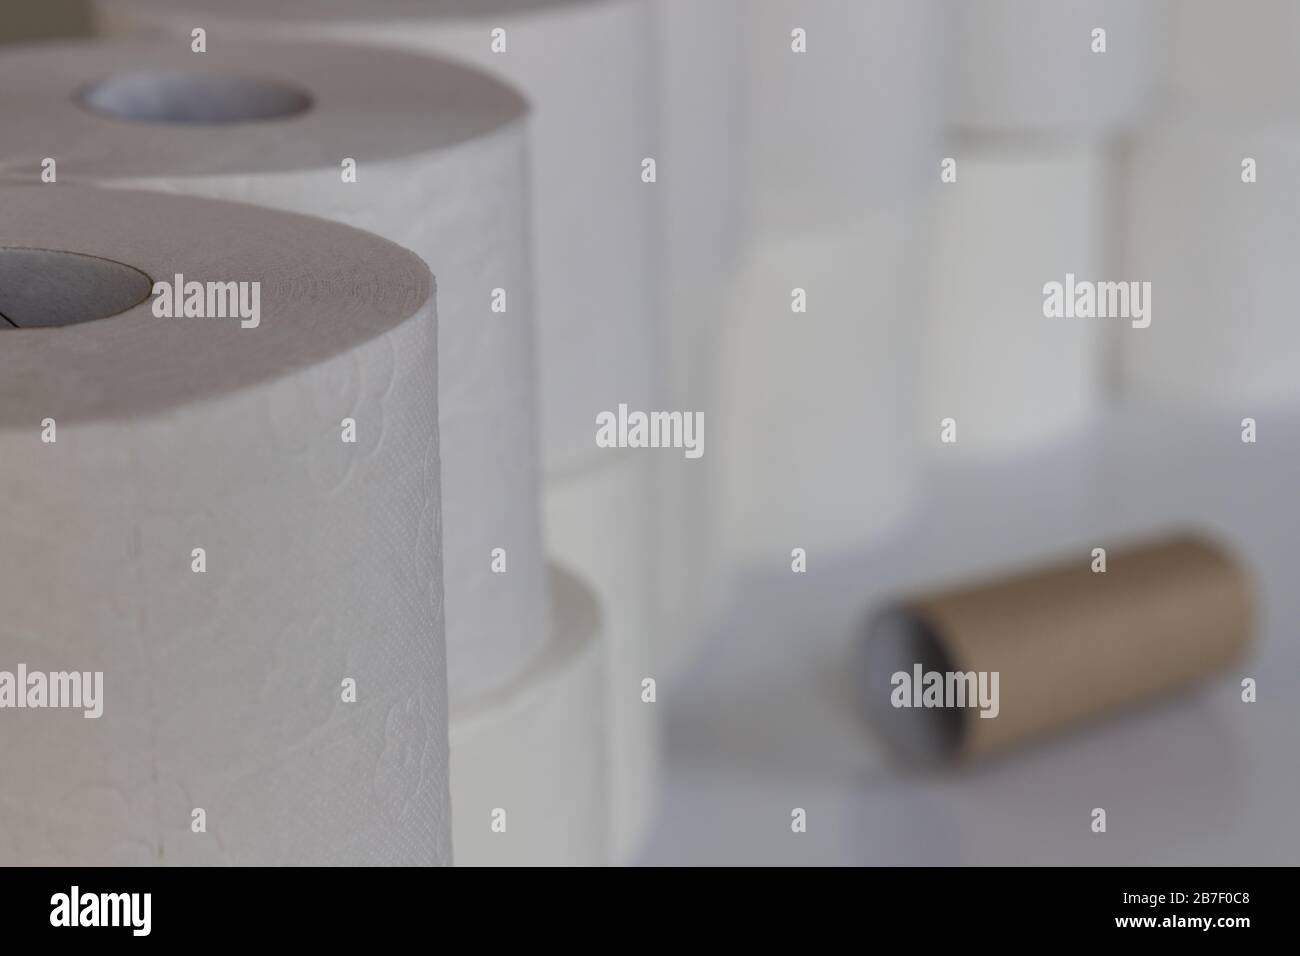 Closeup of white rolls of toilet paper Stock Photo